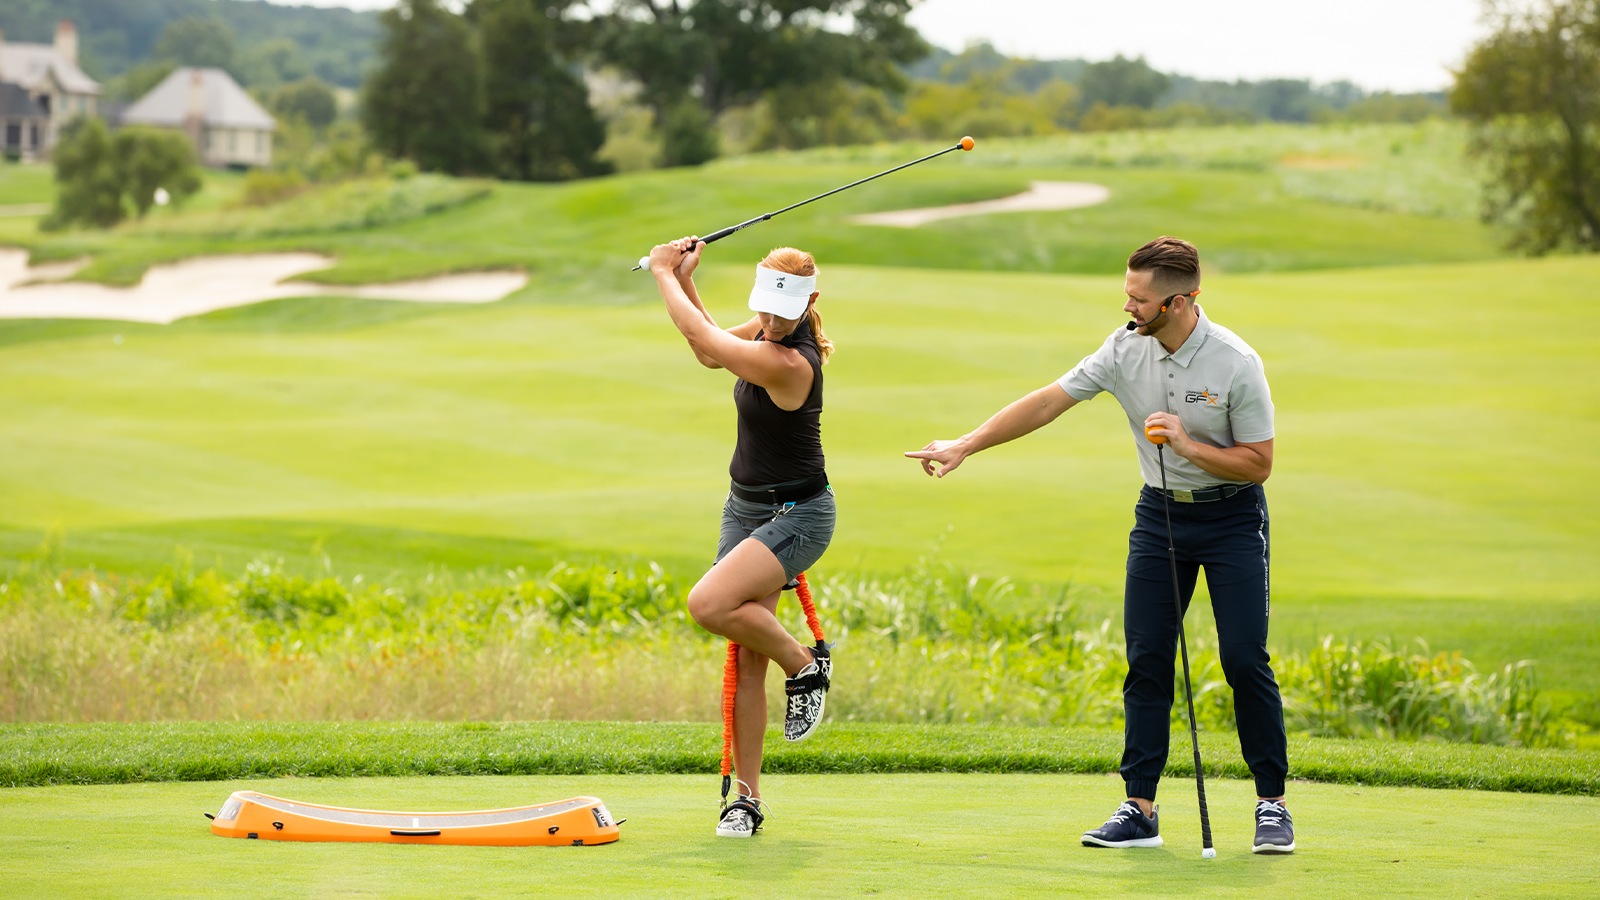 Three Drills to Improve Your Golf Performance